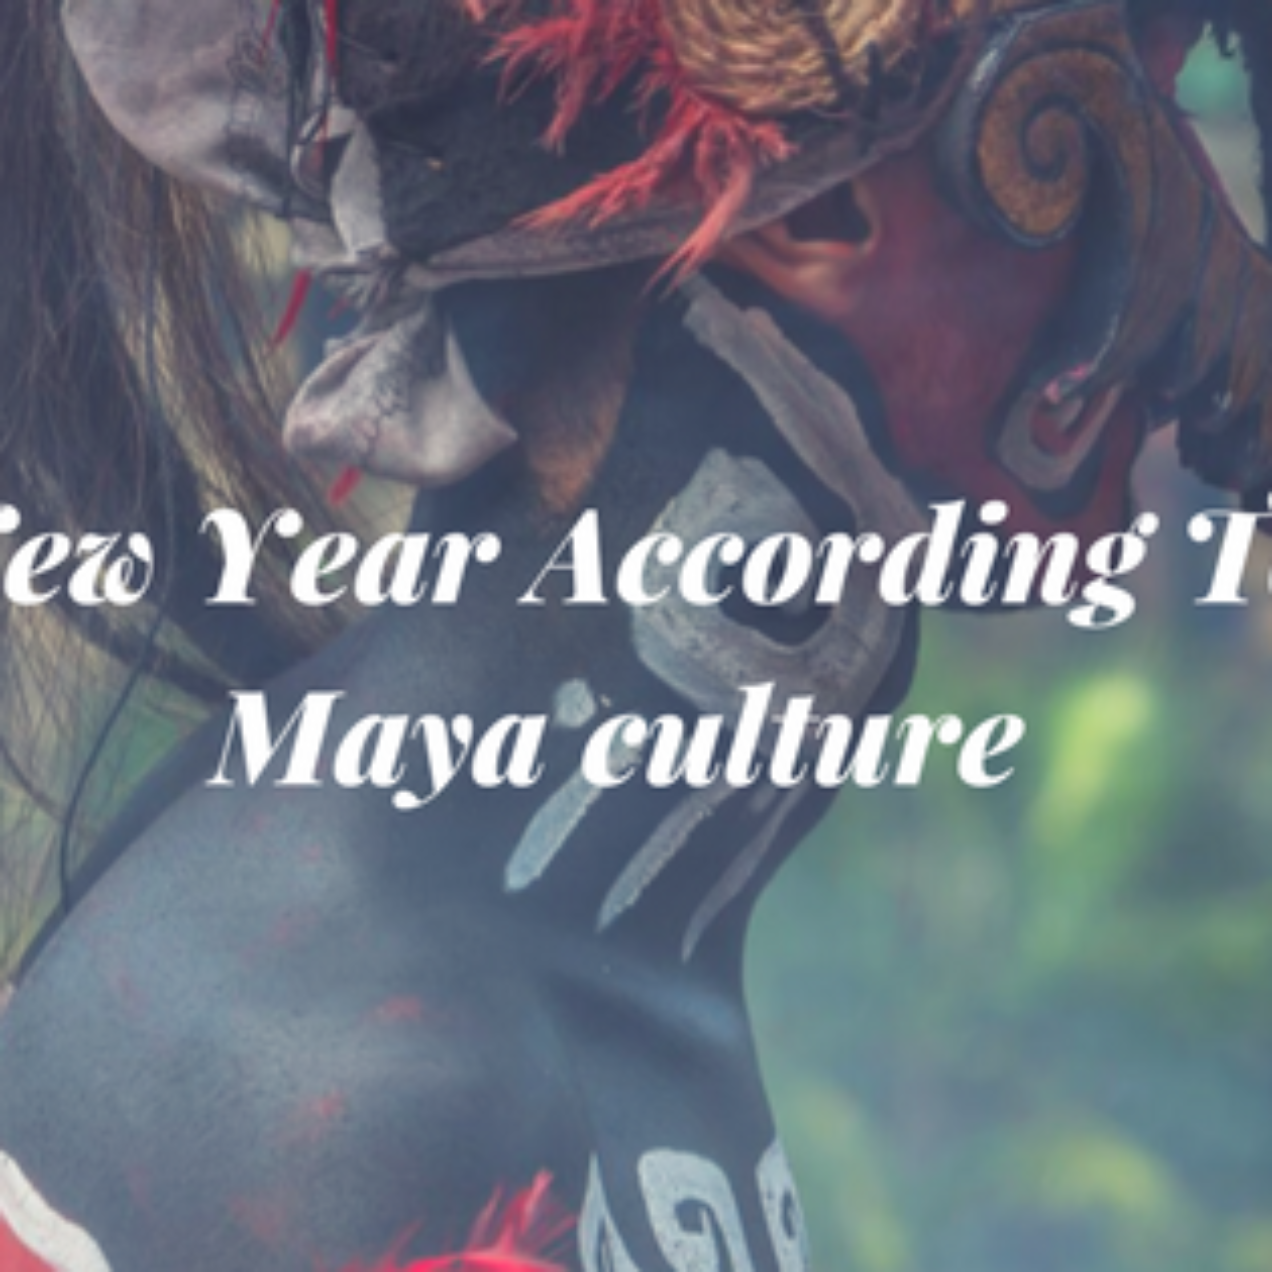 New Year According To Maya culture